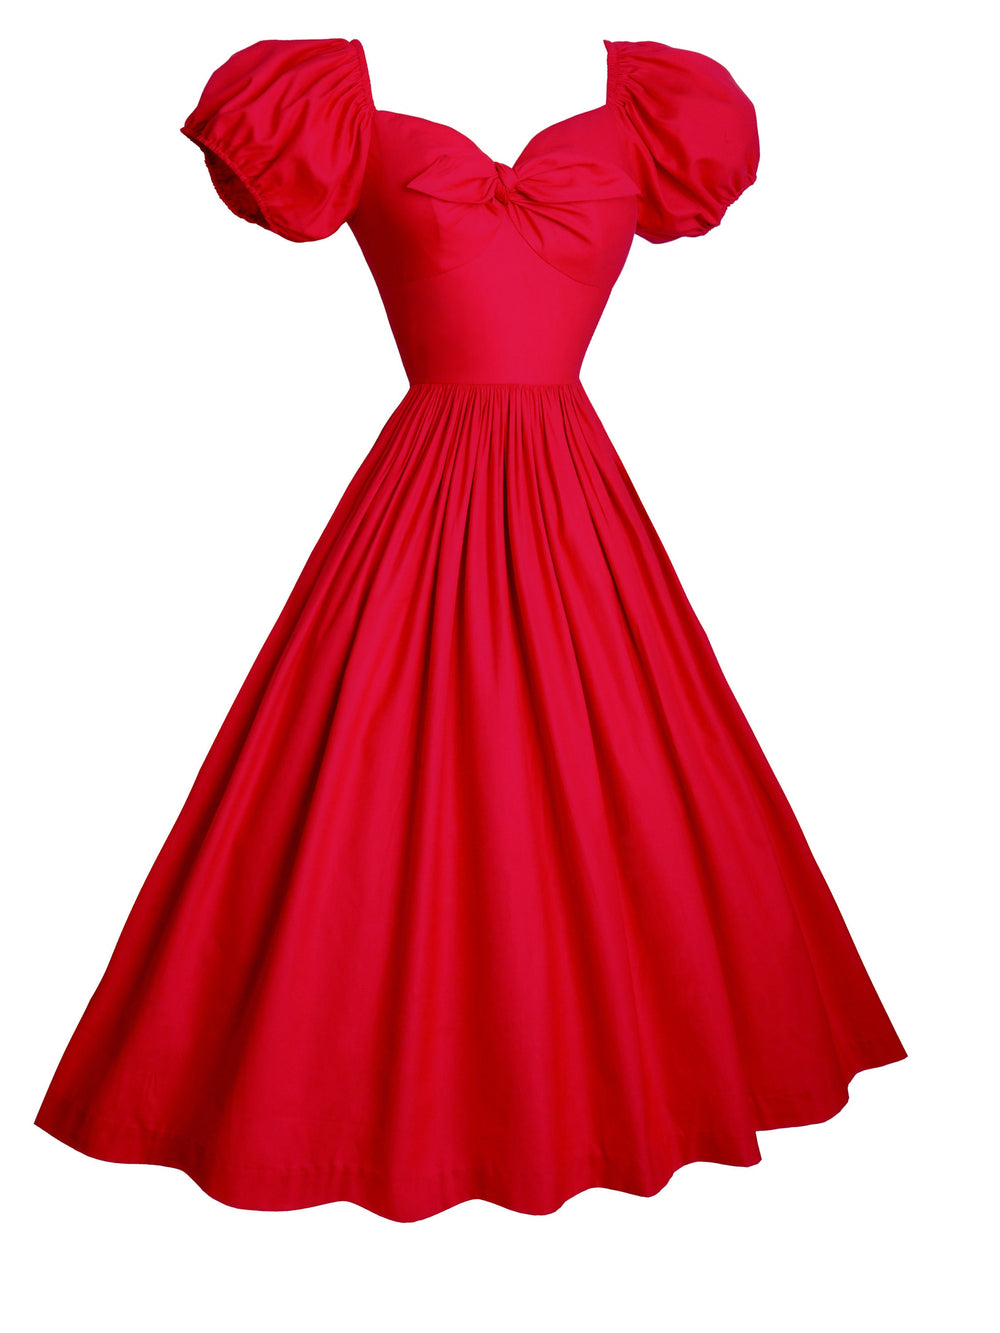 MTO - Dottie Dress in Cardinal Red Cotton